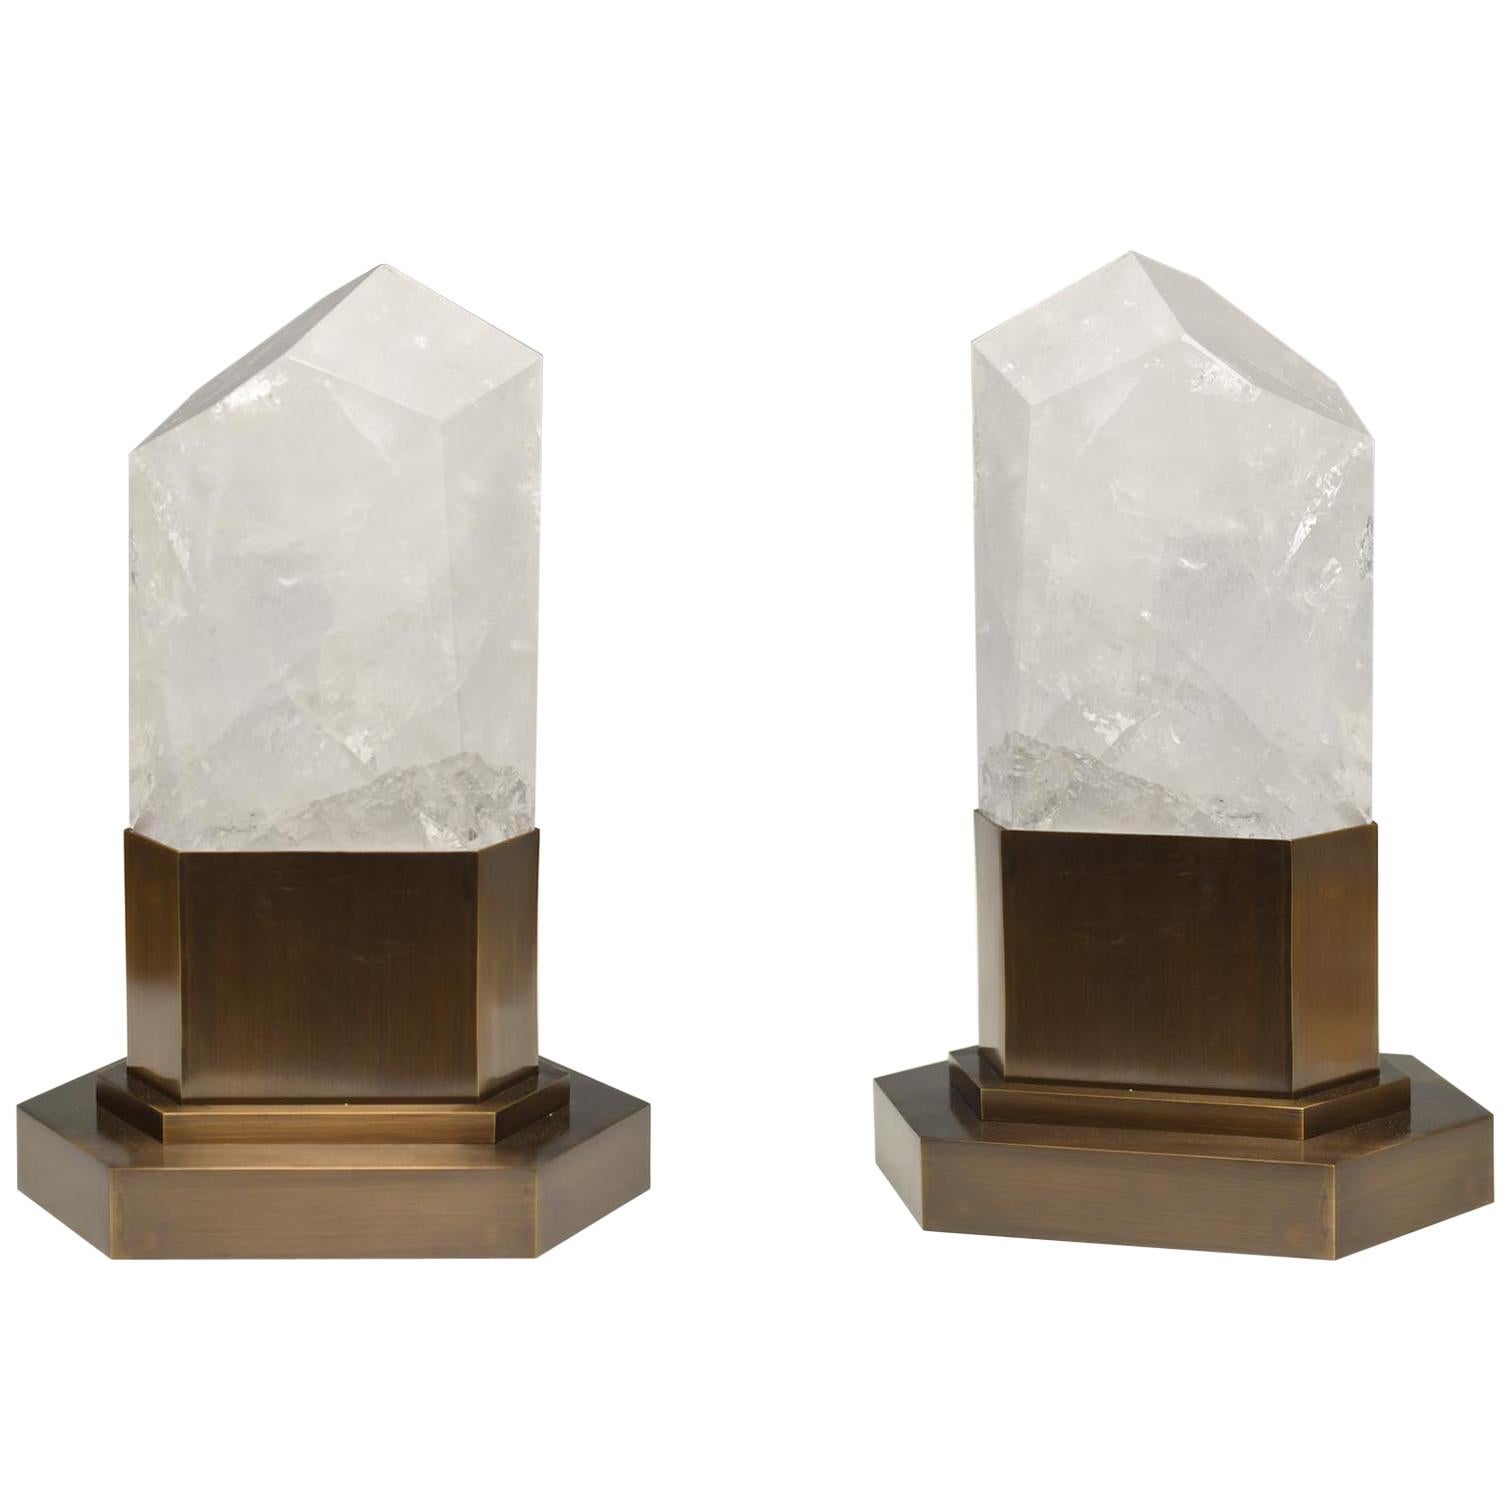 Group of Two Rock Crystal Obelisk Lights by Phoenix